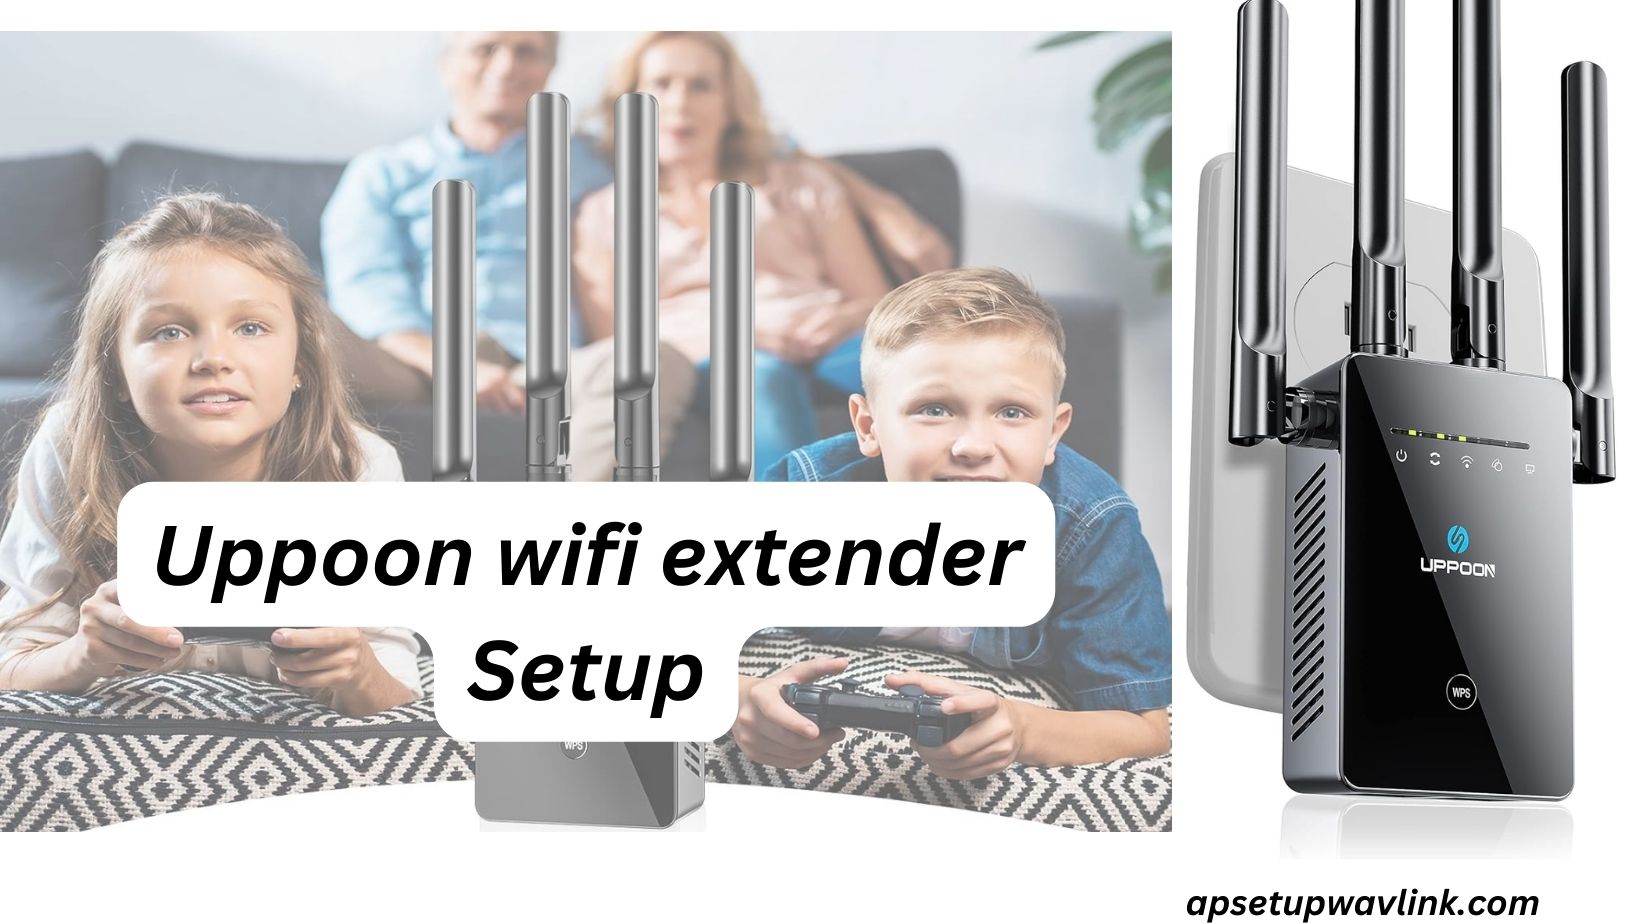 Uppoon wifi extender Setup